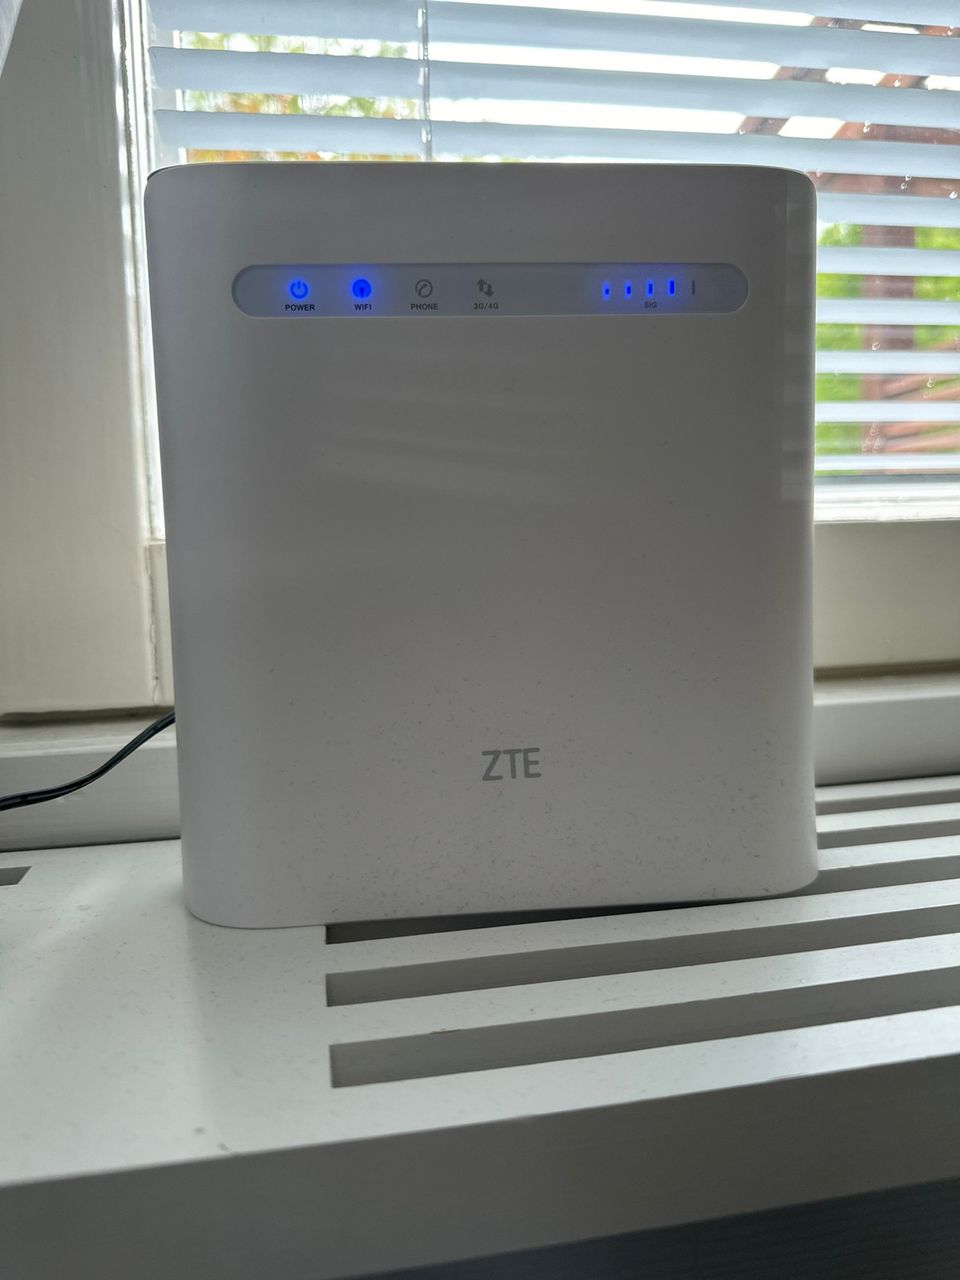 ZTE 3G/4G mobiilireititin